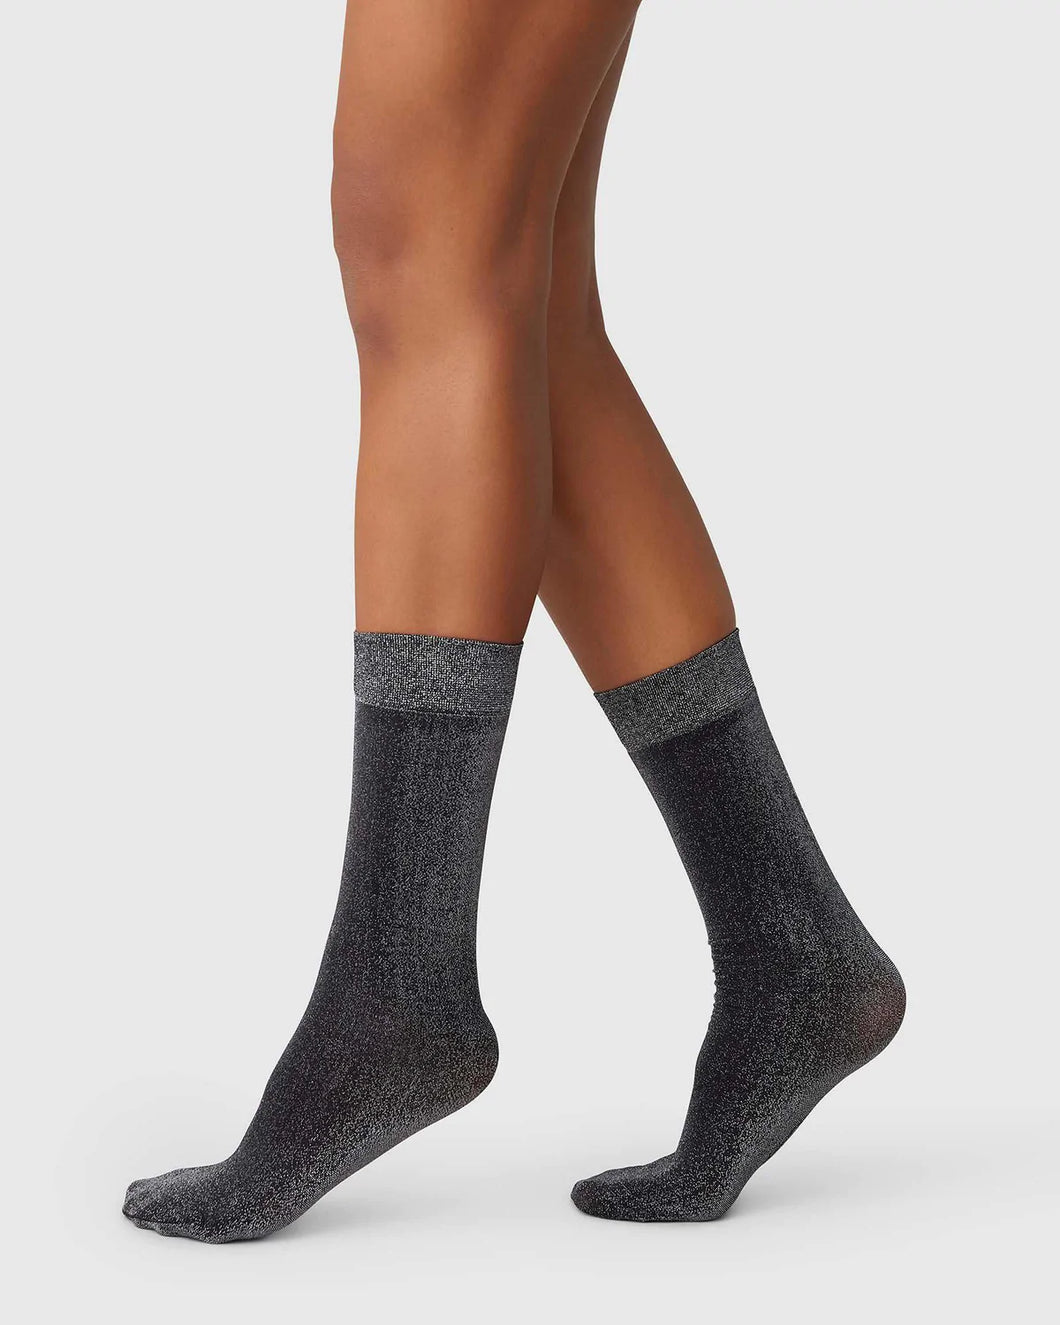 Swedish Stockings - Ines Shimmery - Socken - schwarz silber